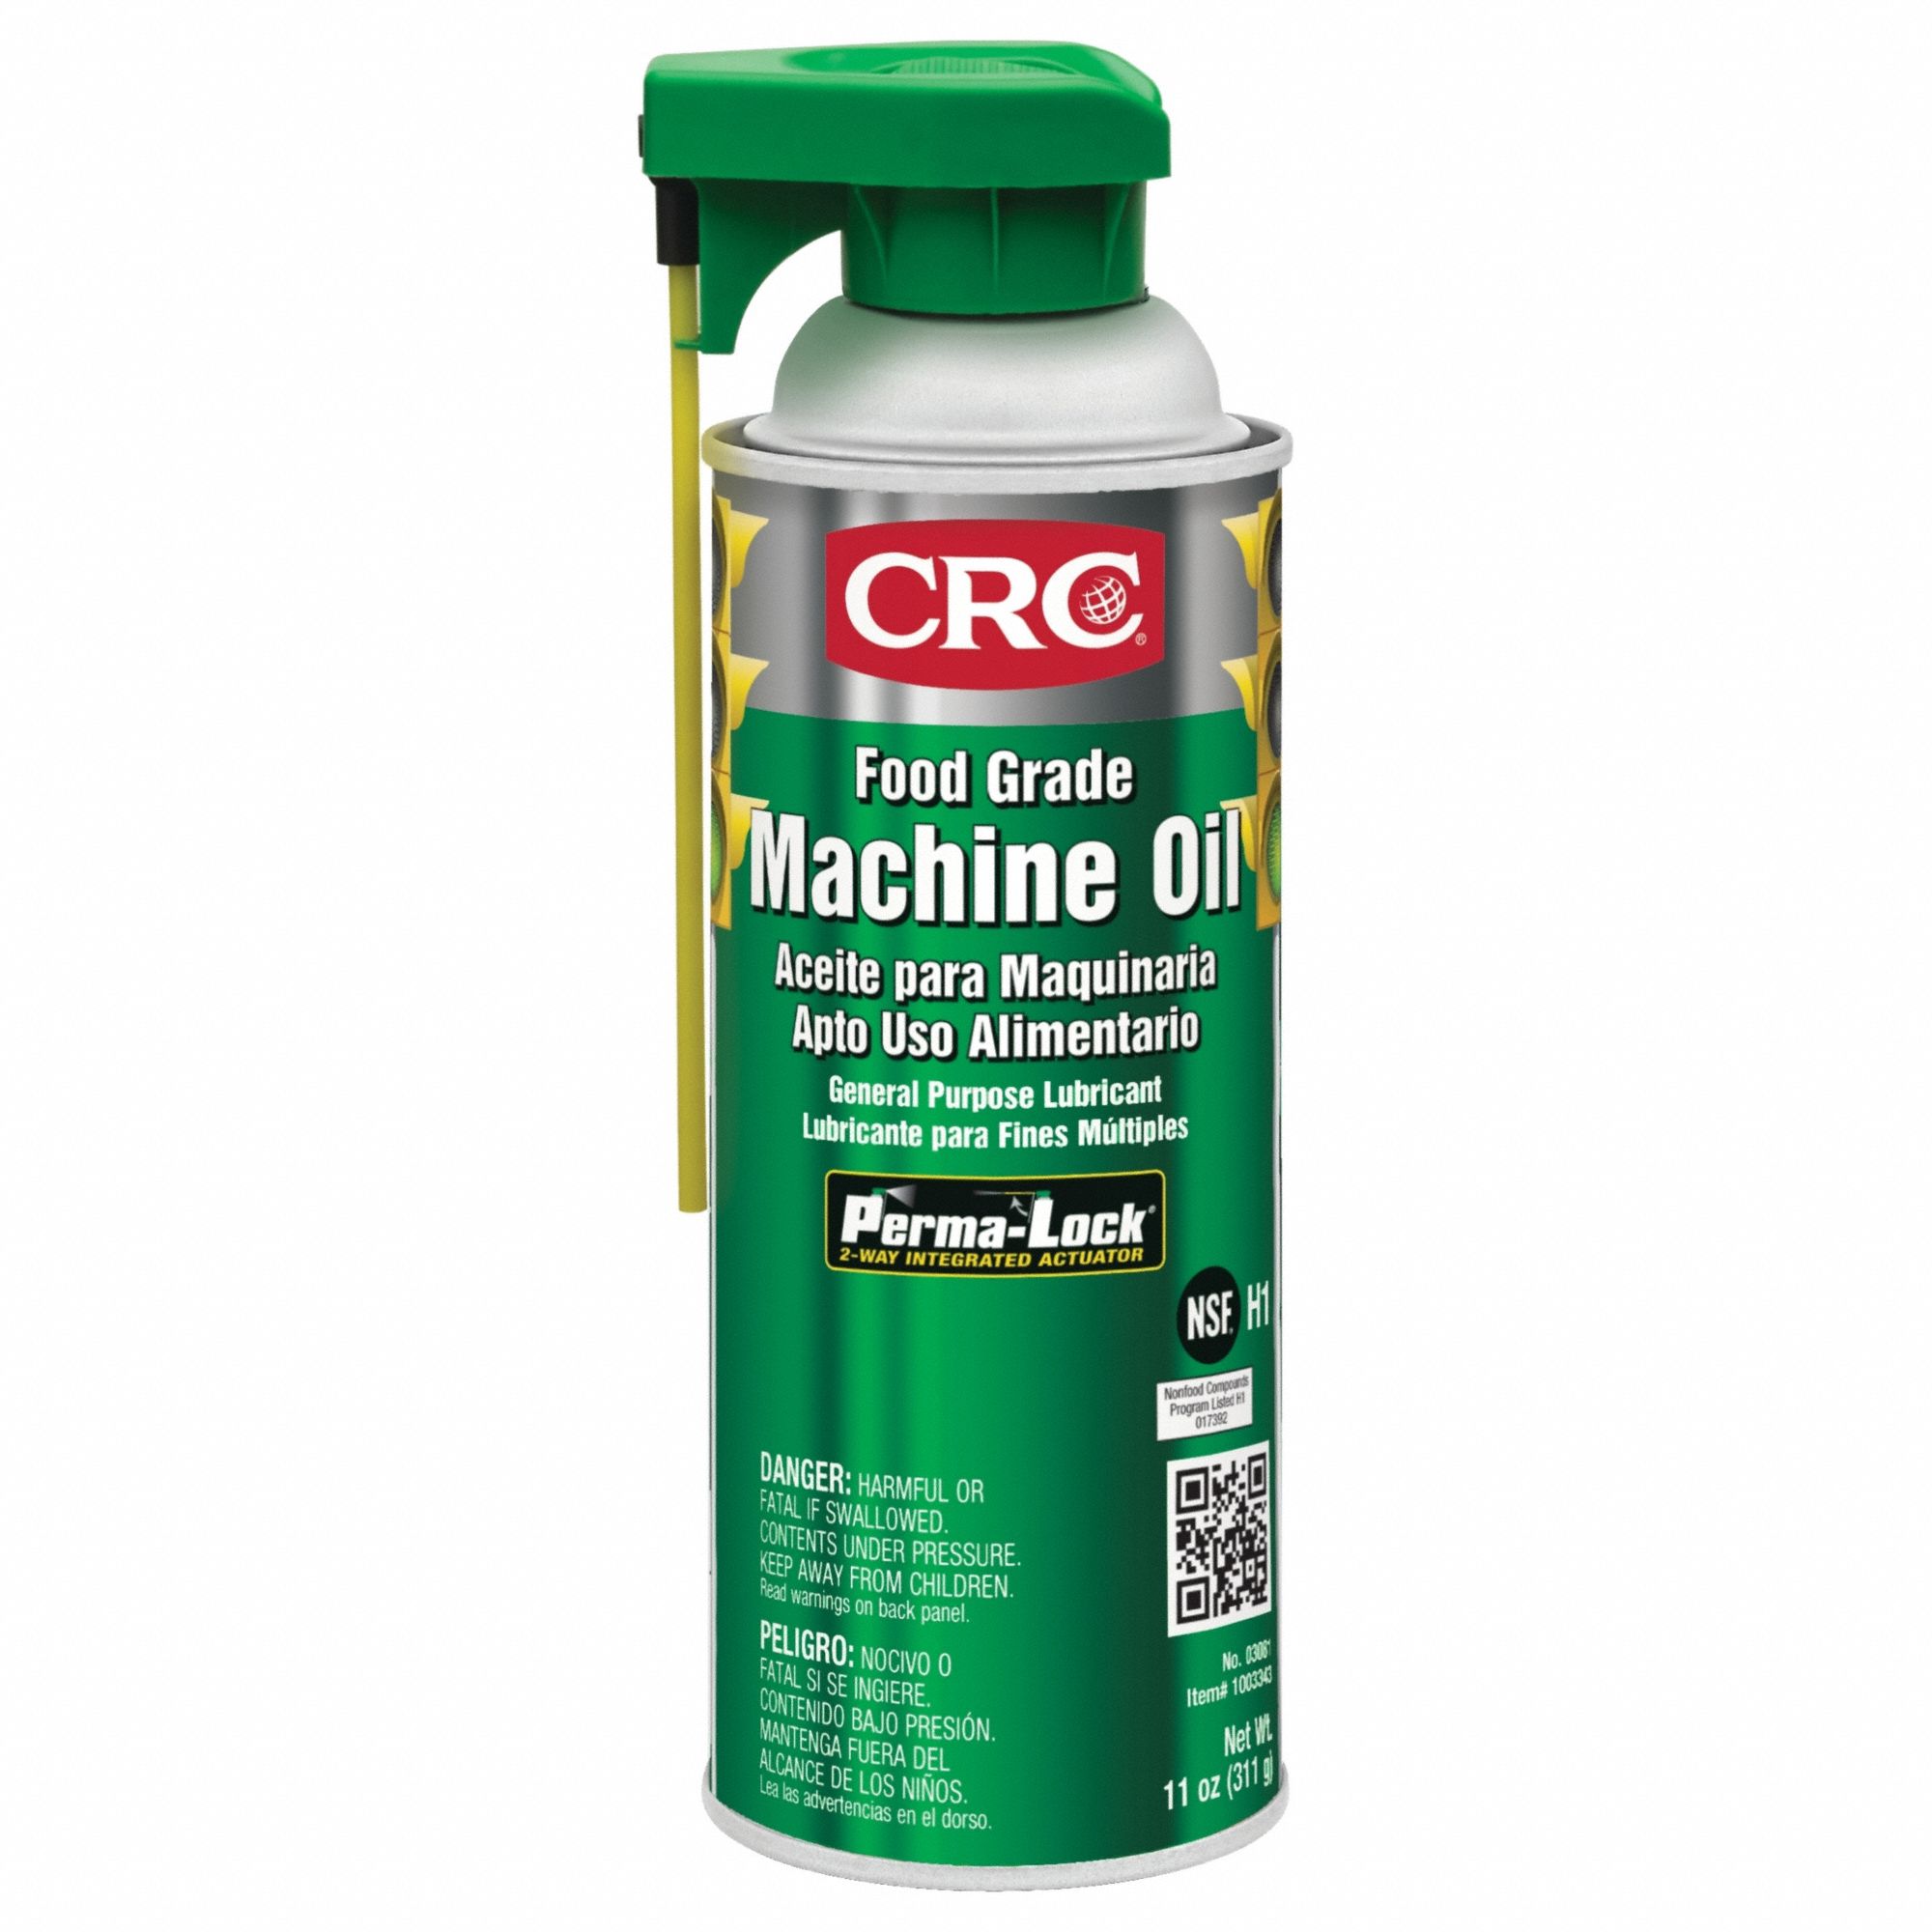 CRC, Food Grade Machine Oil, H1 Food Grade, Machine Oil - 2F132